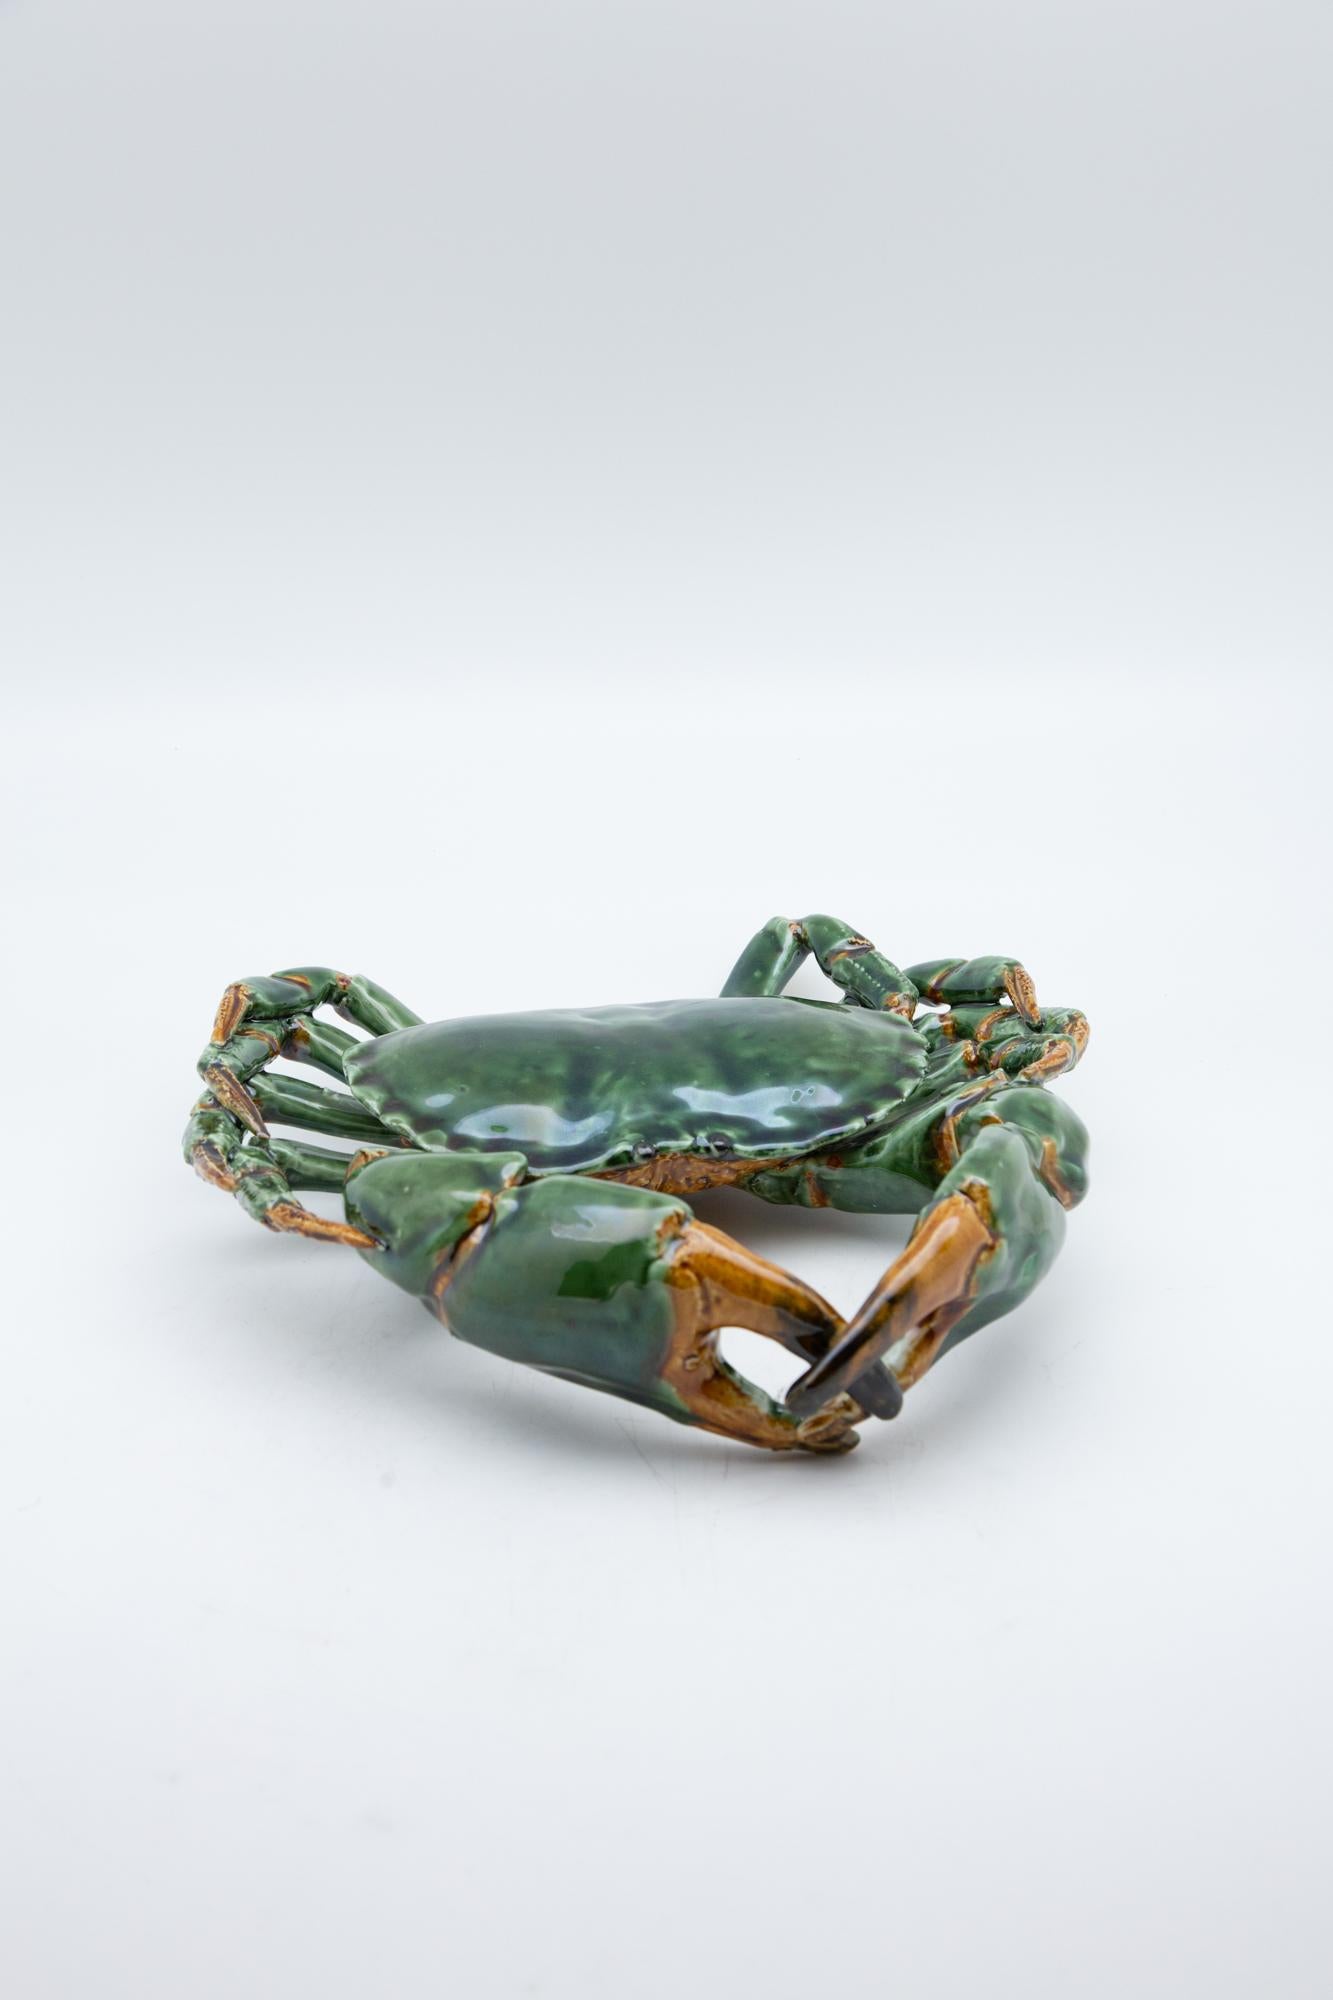 Portuguese Handmade Pallissy or Majollica Large Green Ceramic Crab 2